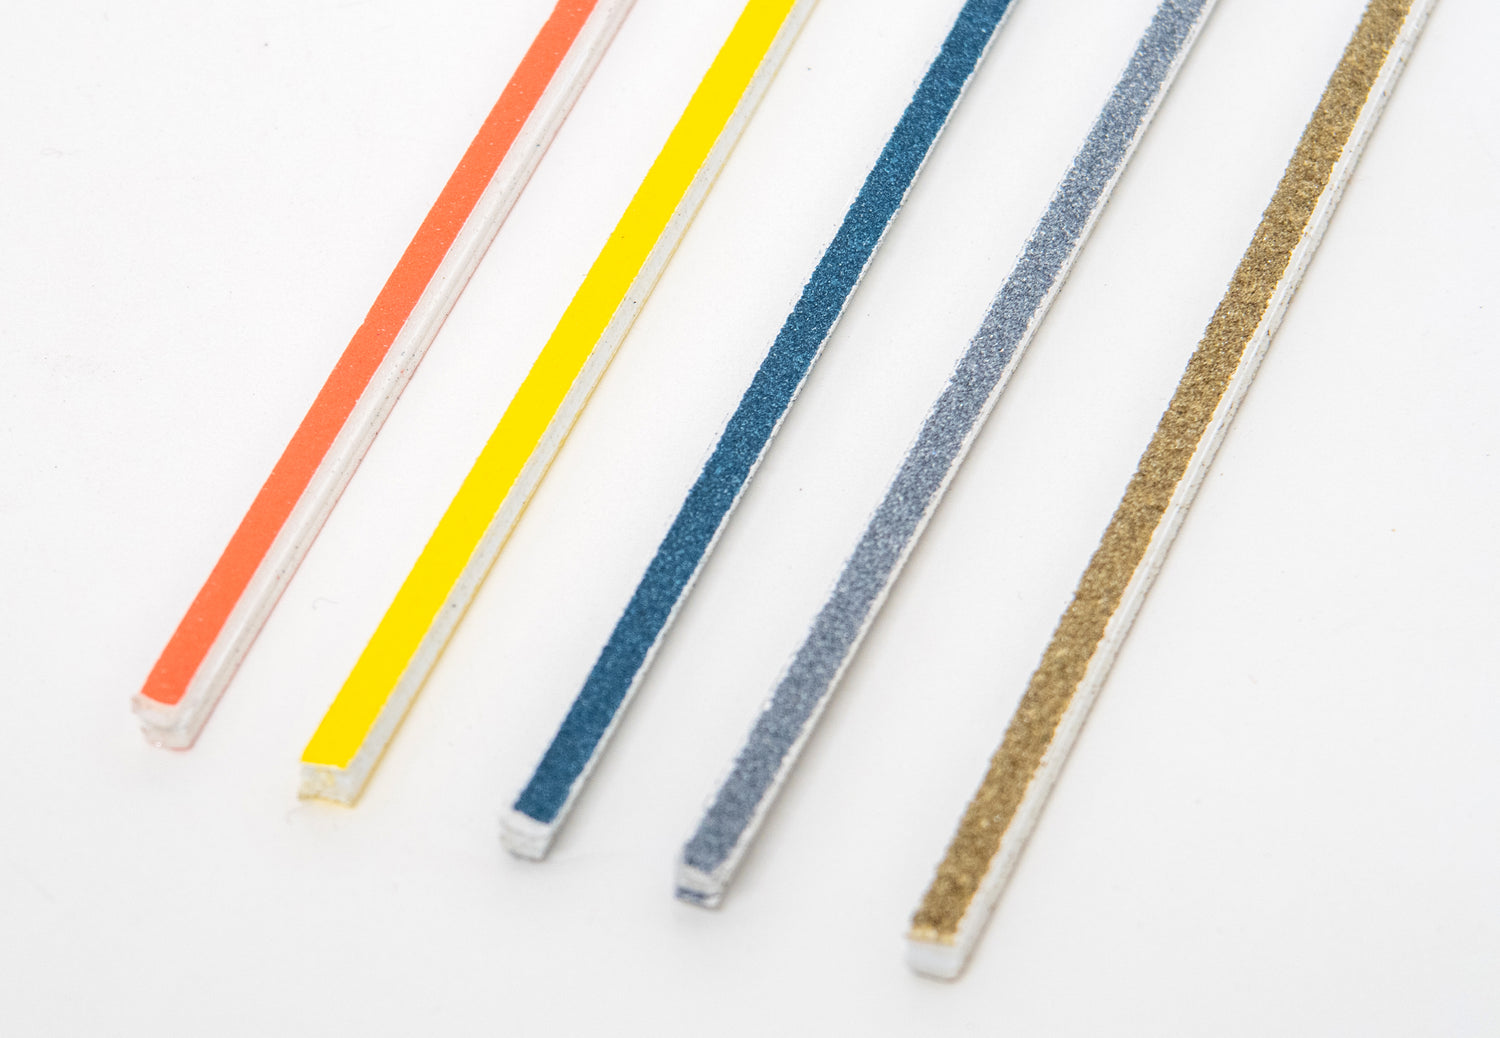 Premium Quality Half Inch Sanding Stick File Set with 3 Sanding Strips